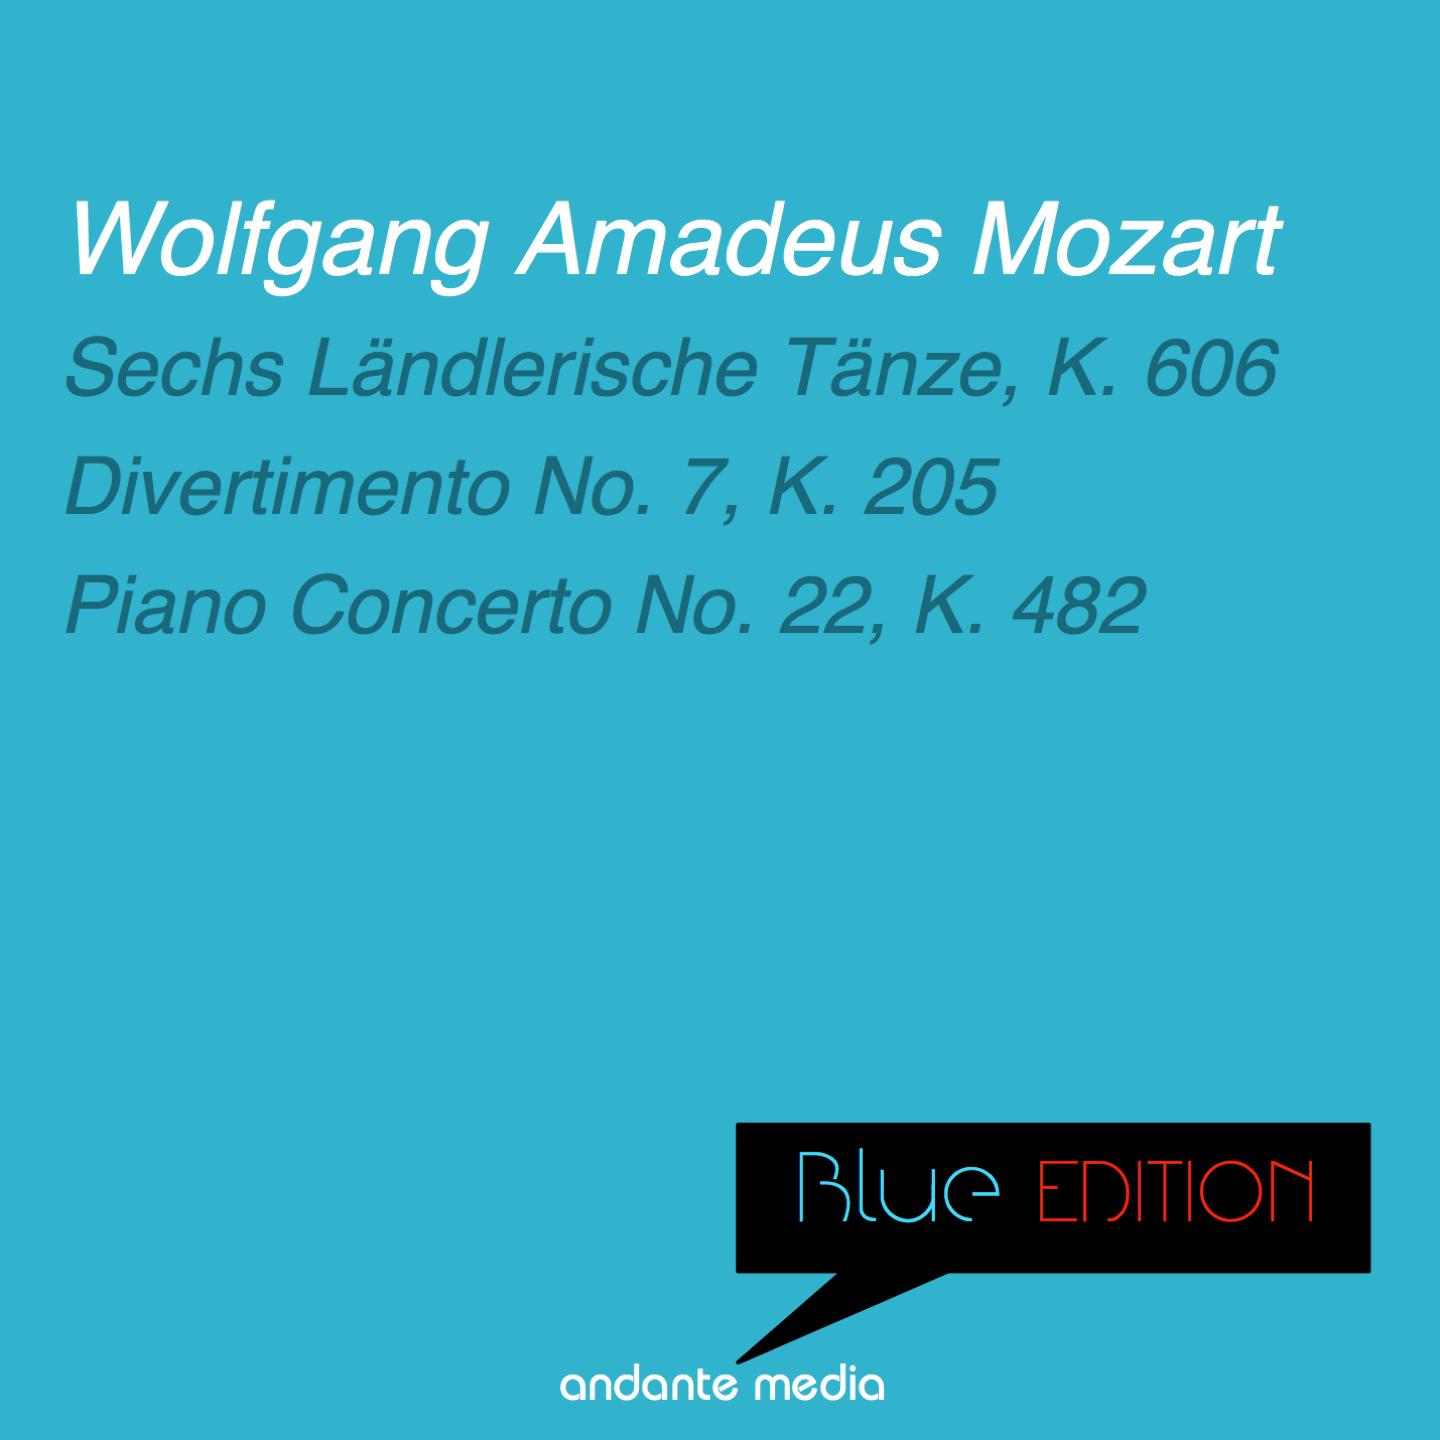 Divertimento No. 7 in D Major, K. 205: I. Largo - Allegro